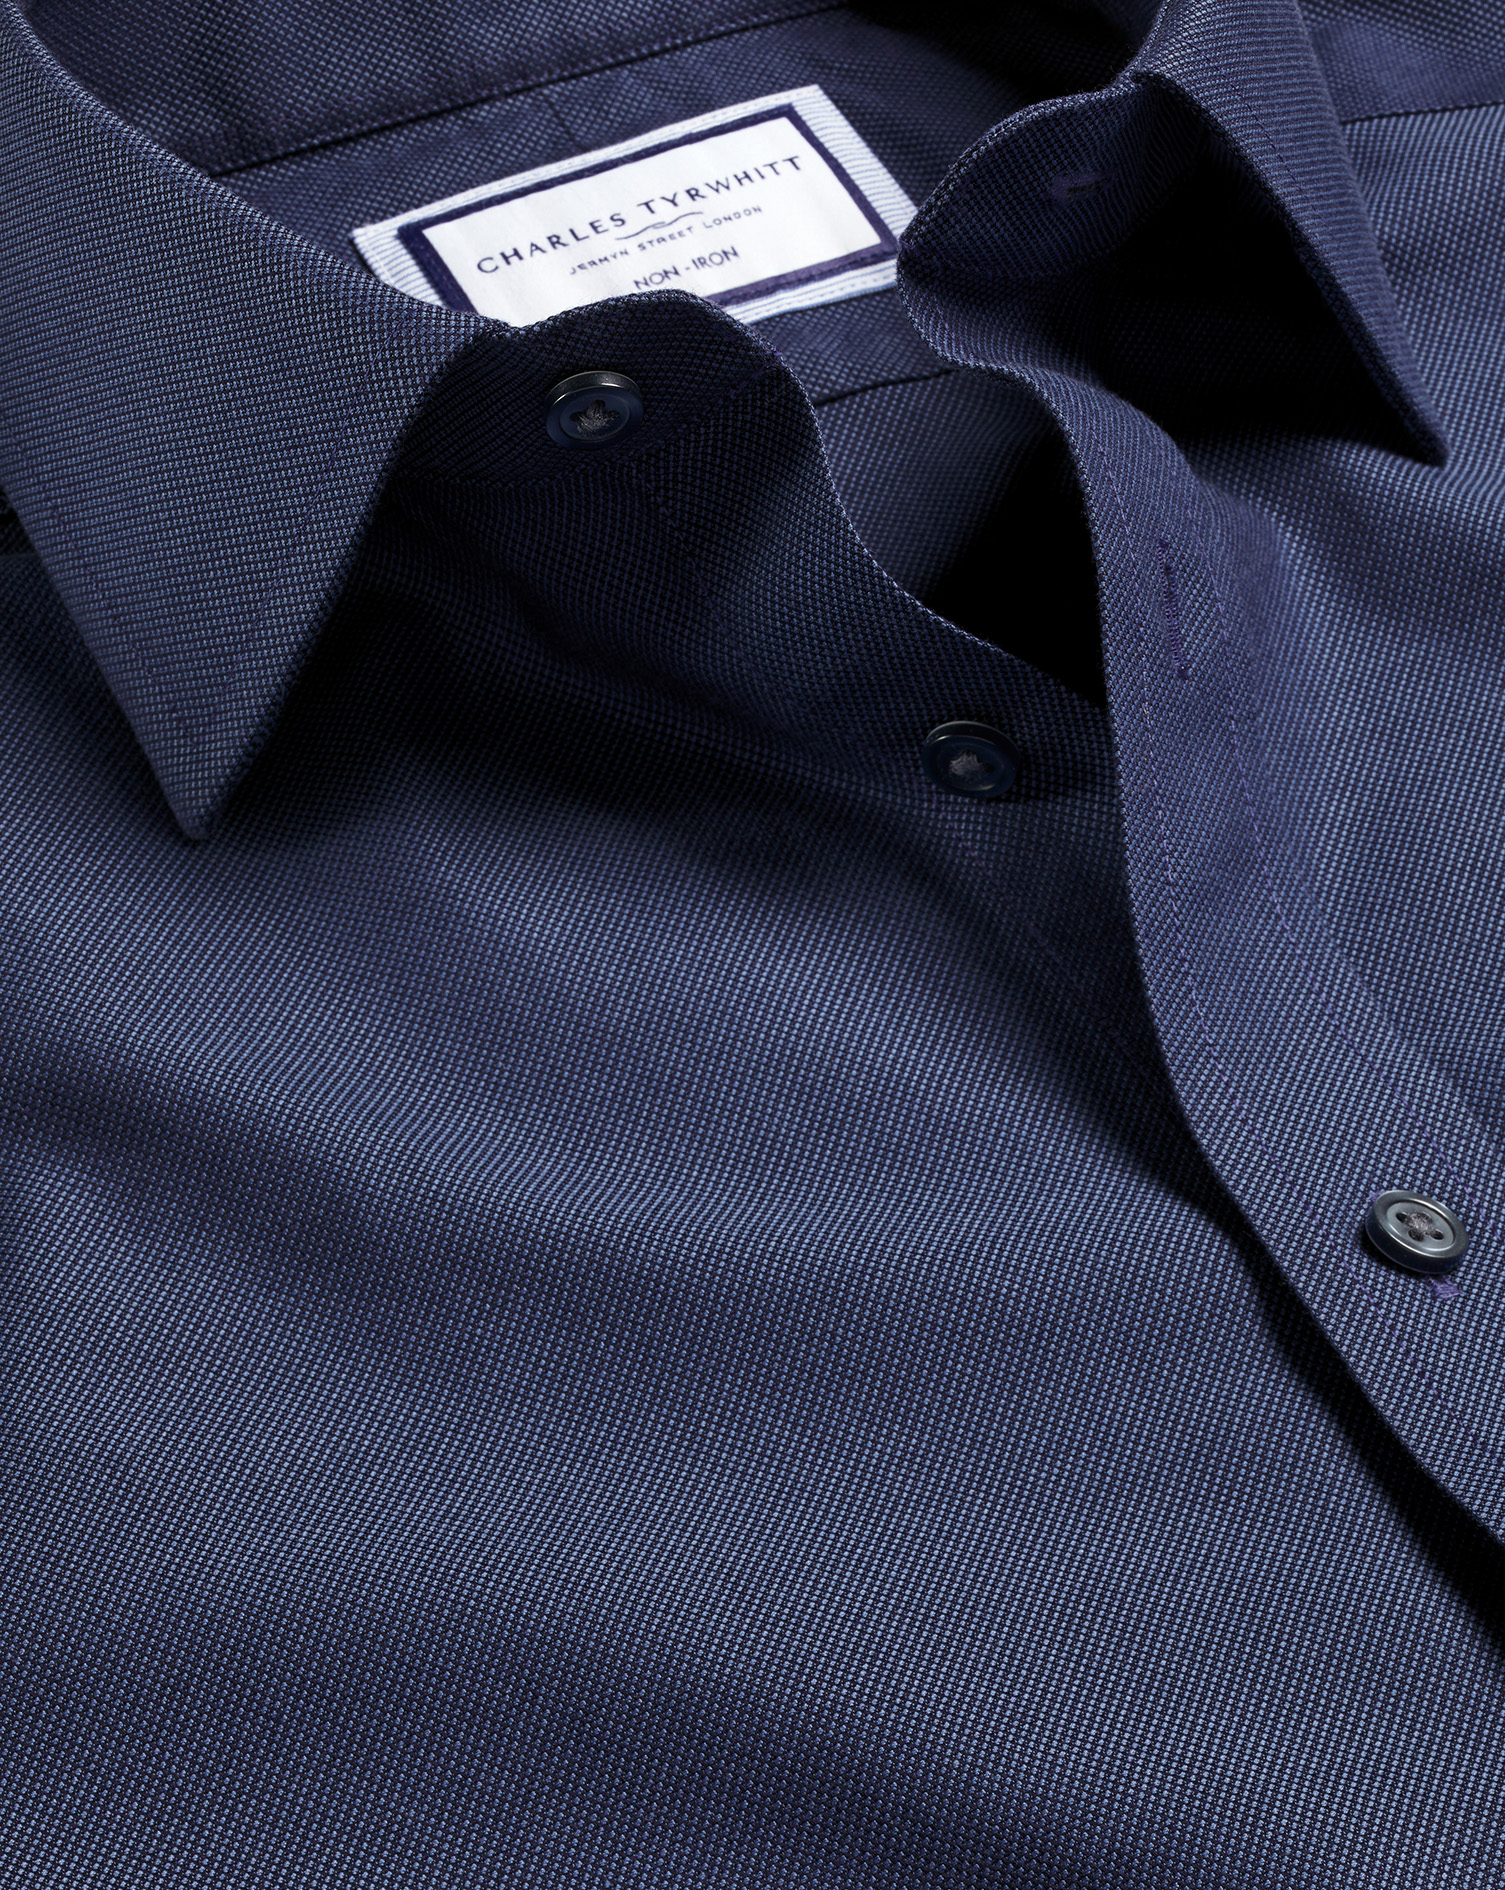 Men's Charles Tyrwhitt Non-Iron Royal Oxford Dress Shirt - French Blue Single Cuff Size 16.5/36 Cott